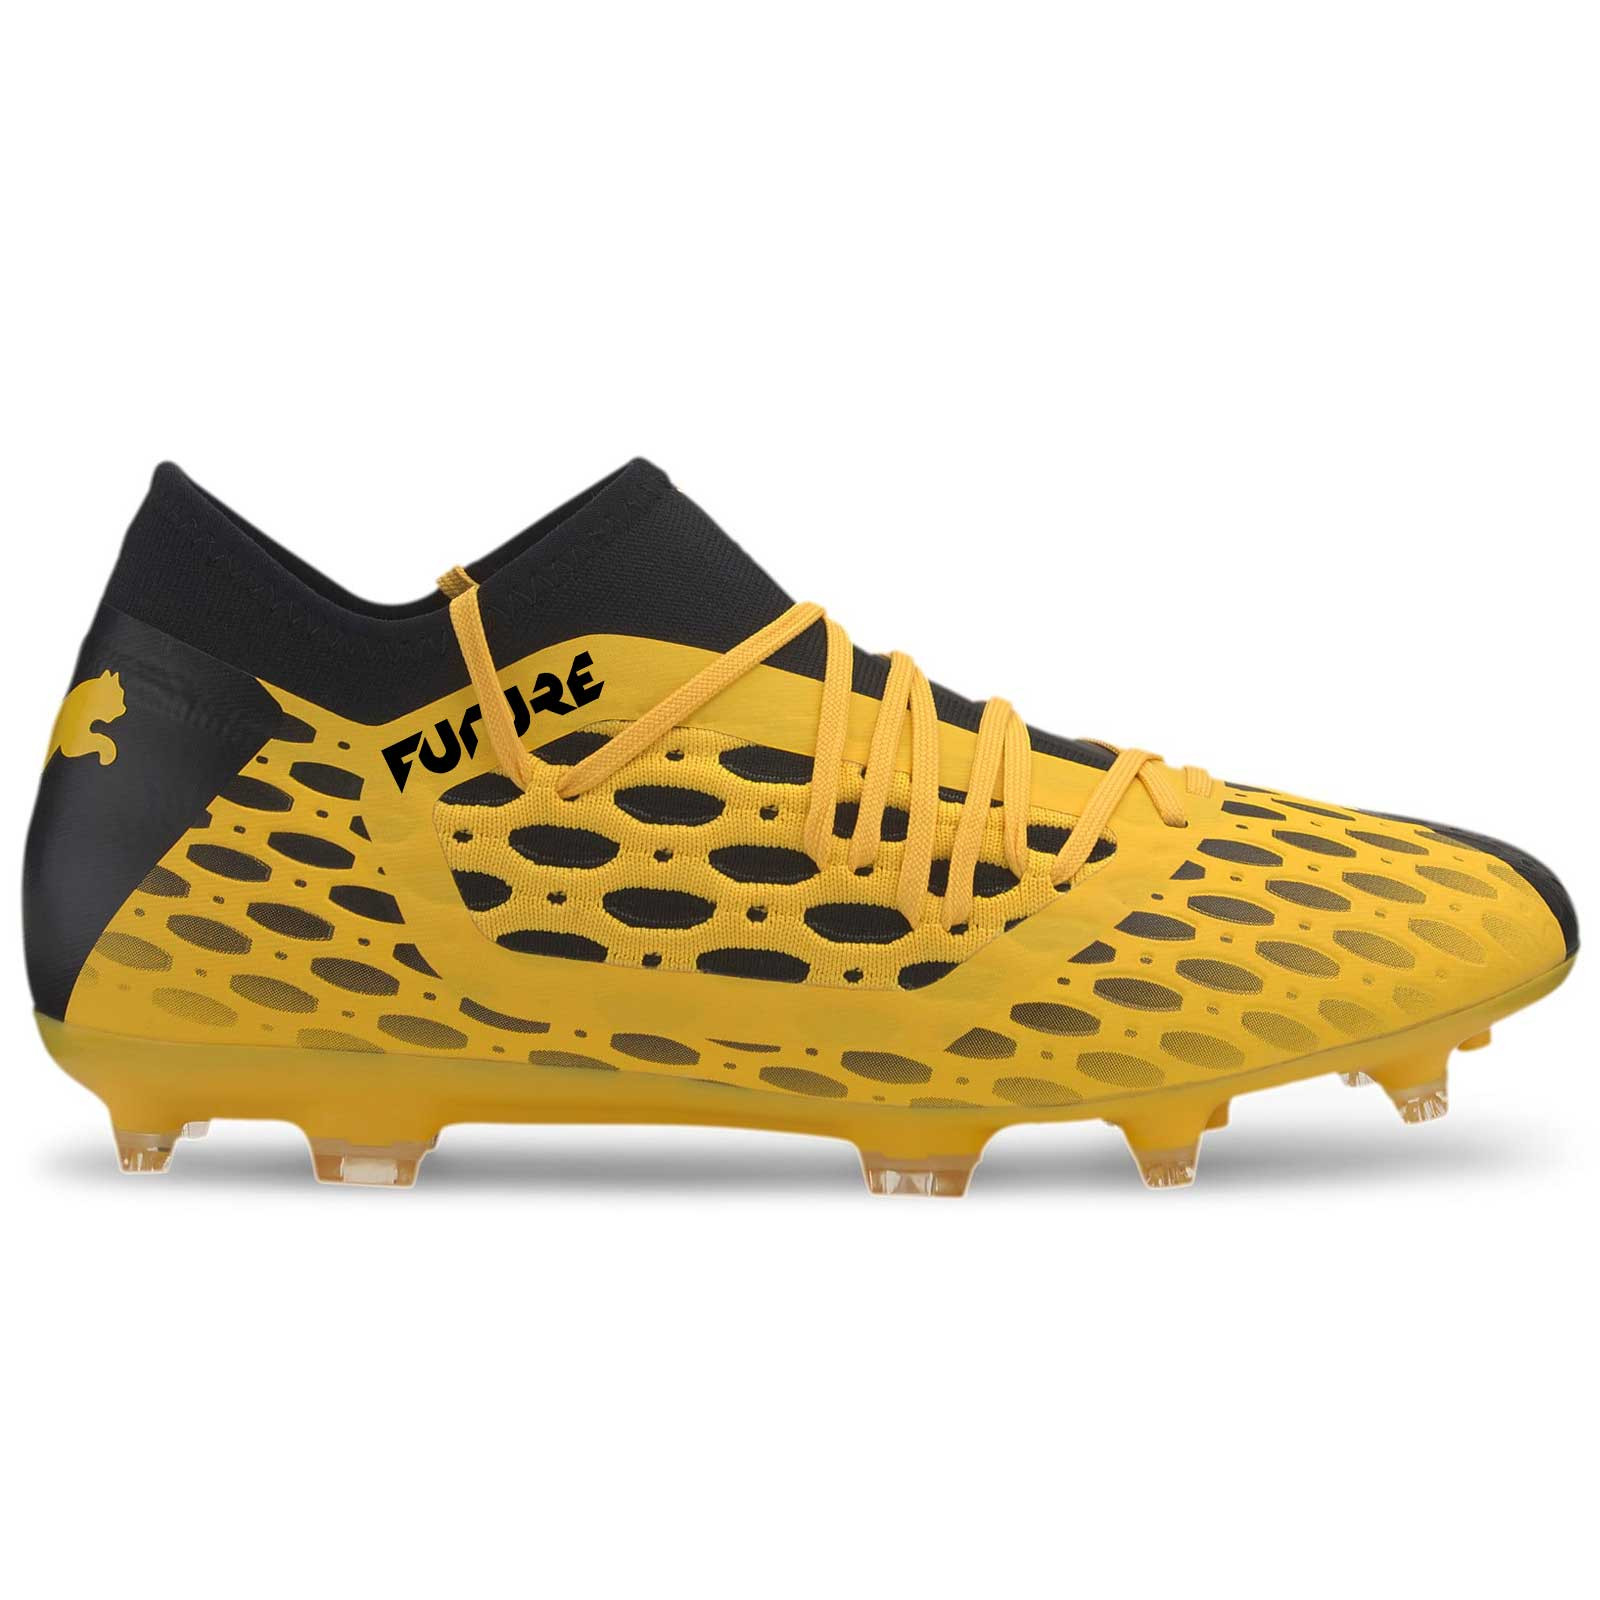 Puma Future 5.3 FG/AG amarillas y negras | futbolmania